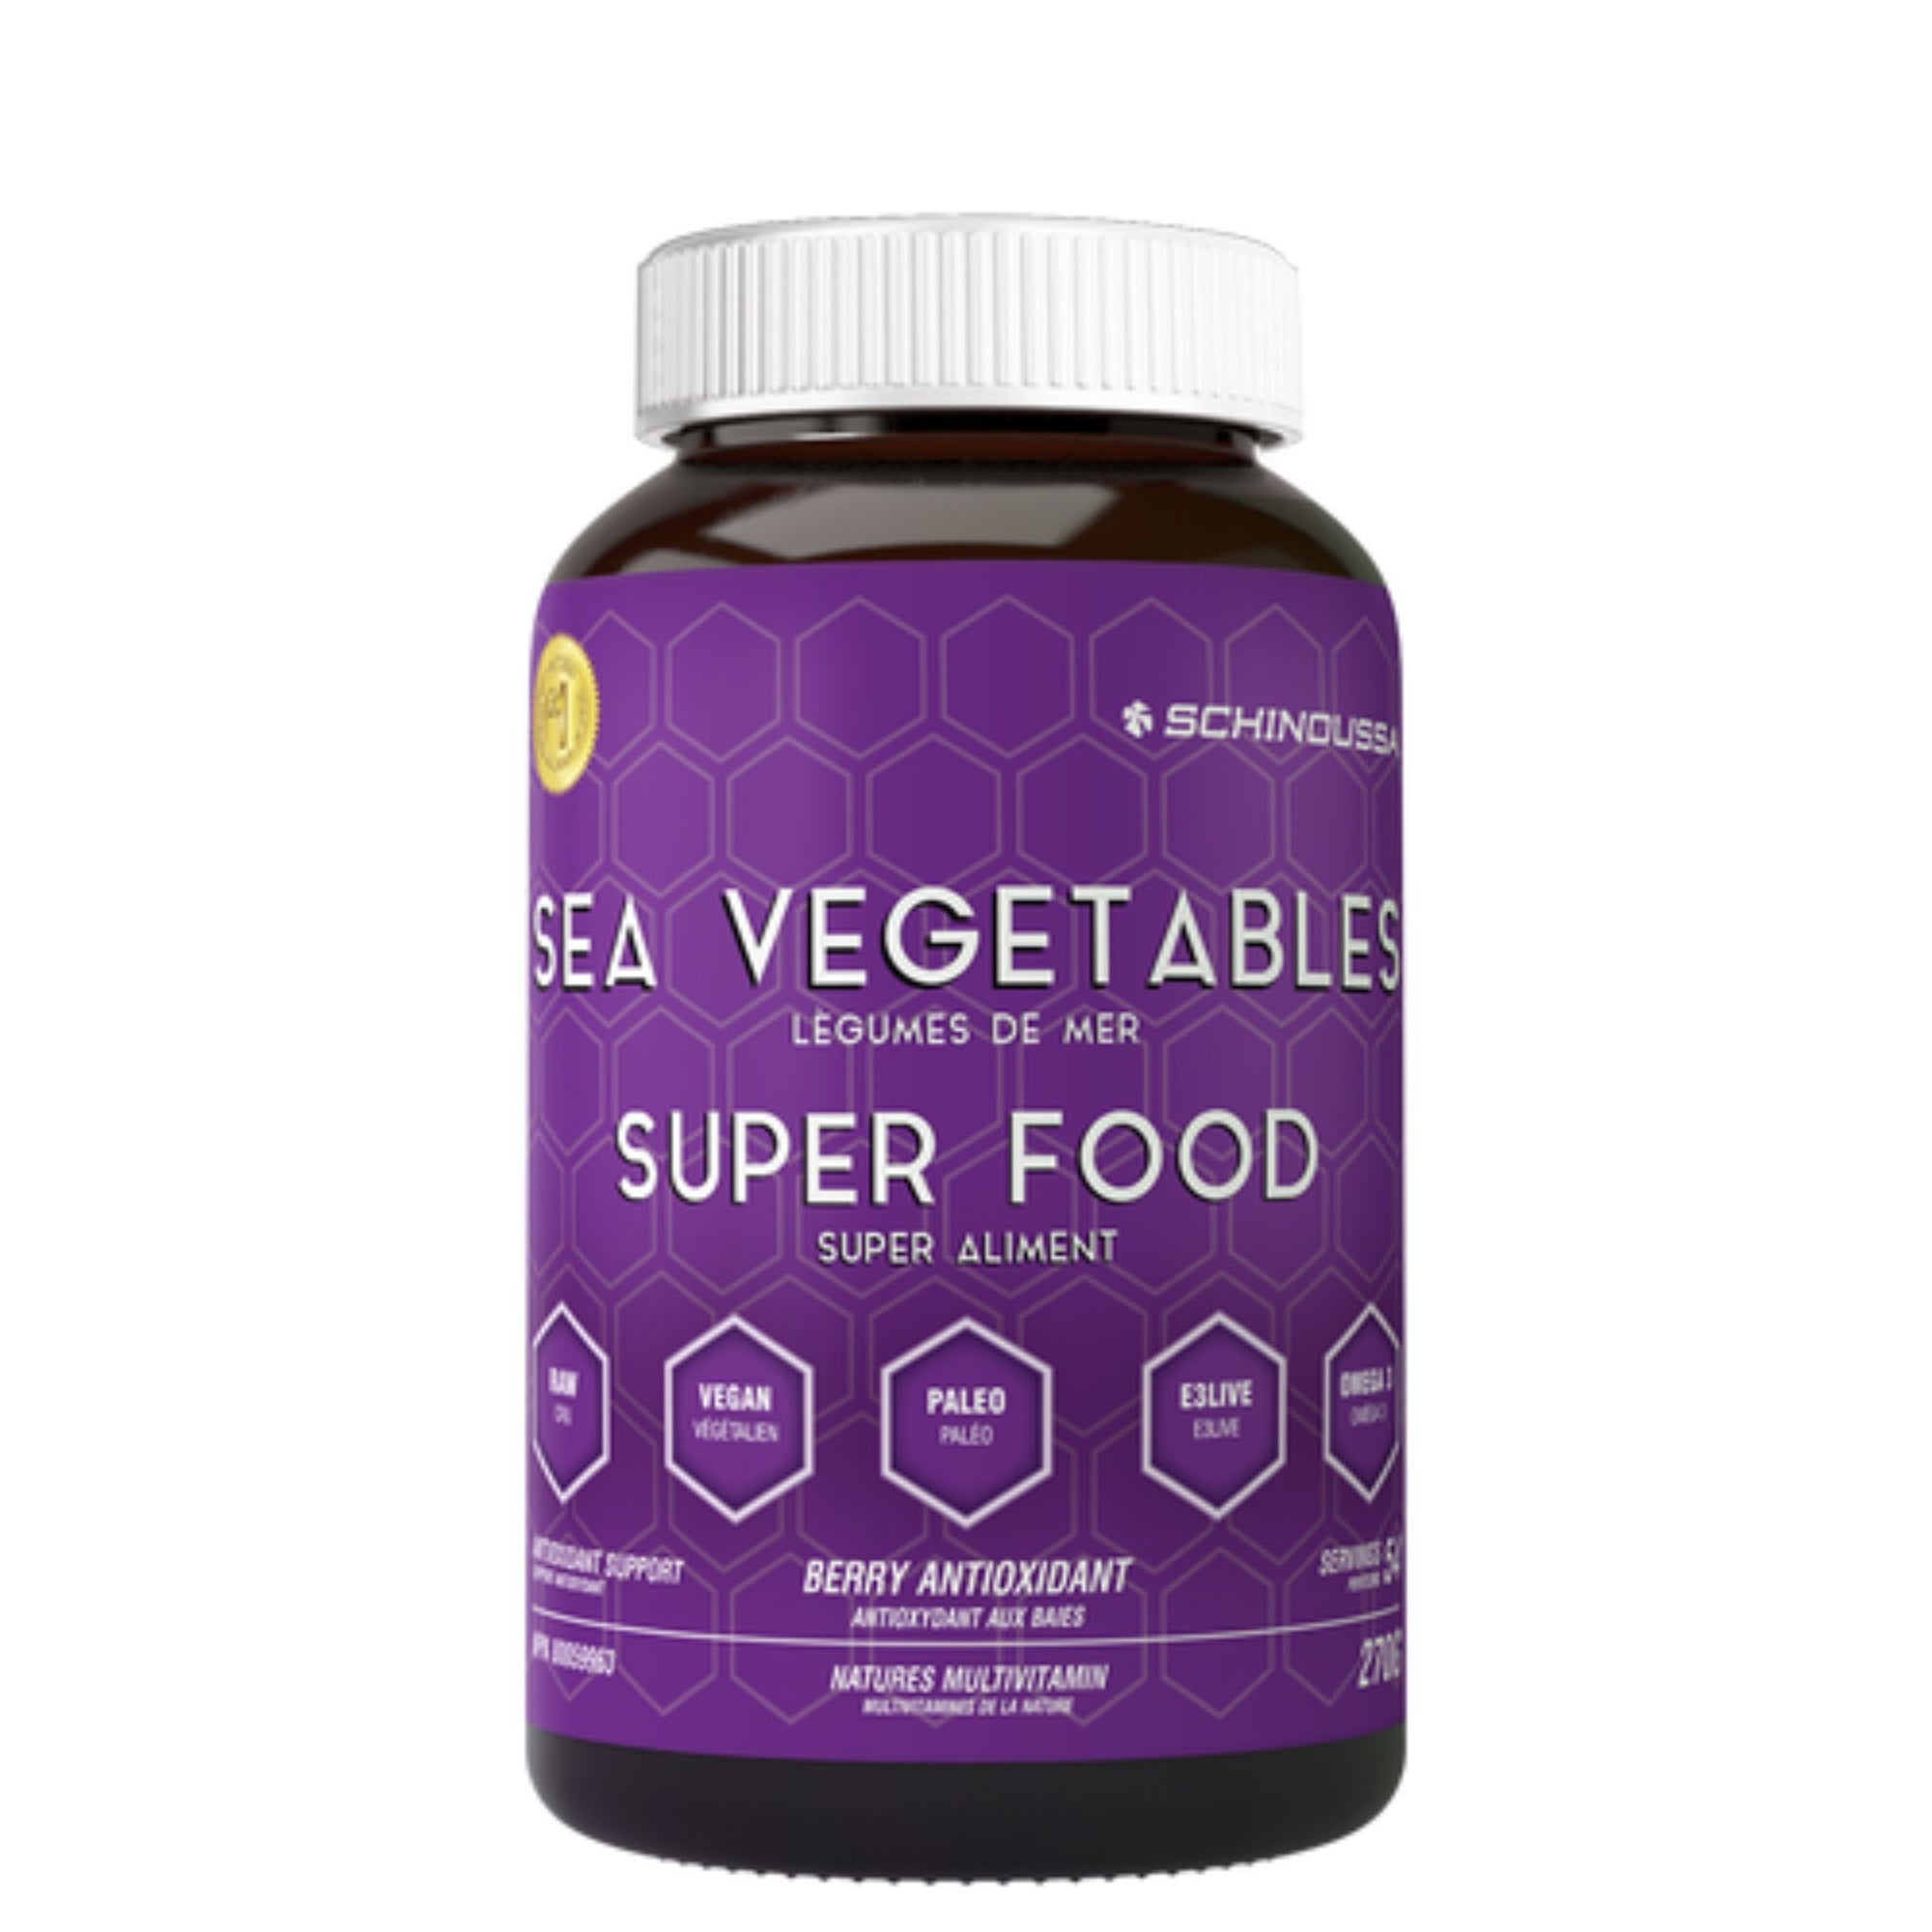 Schinoussa Sea Vegetables - Berry Antioxidant formula Super Food - 270g powder.